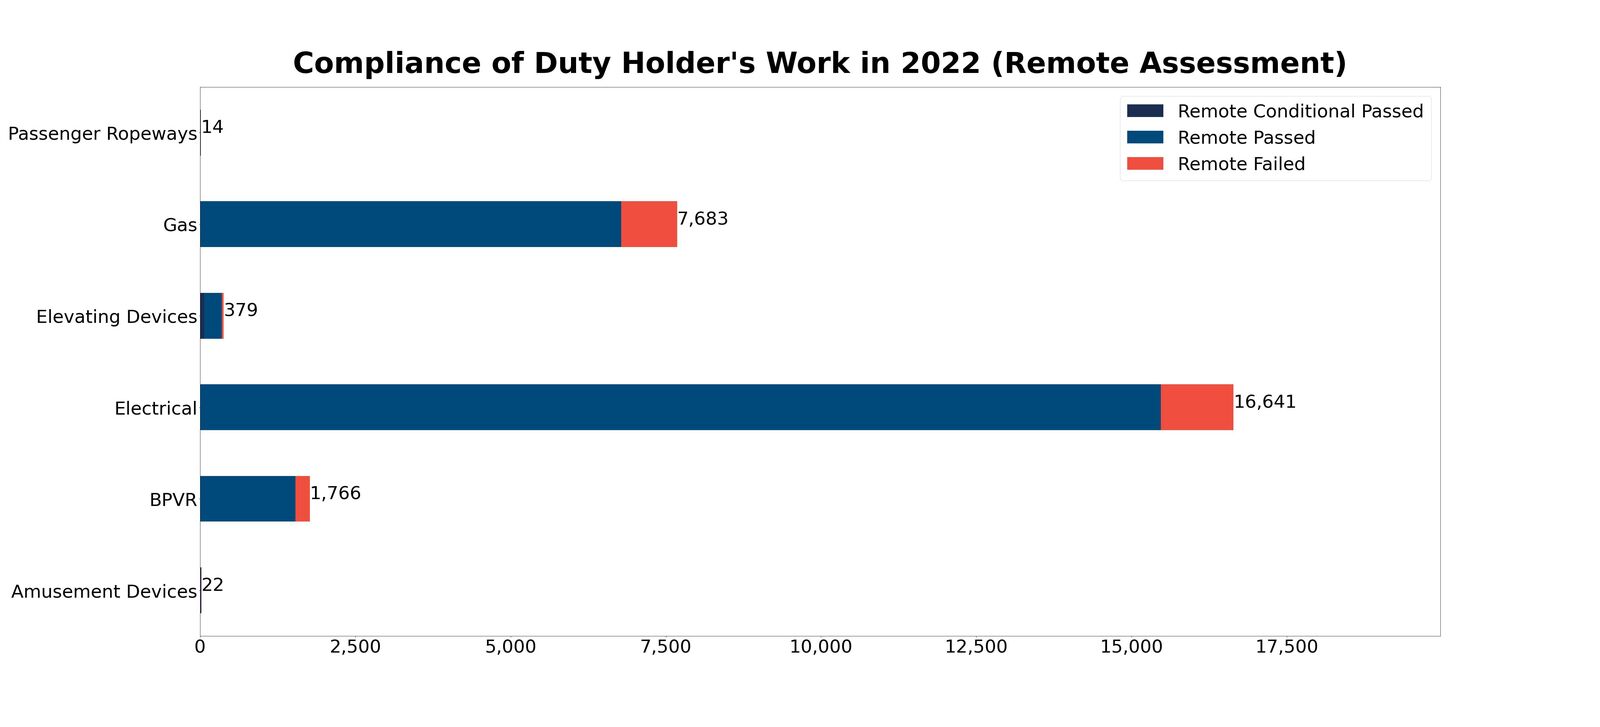 Compliance-Duty-Holder-Work-2022-Remote-Assessment.jpg